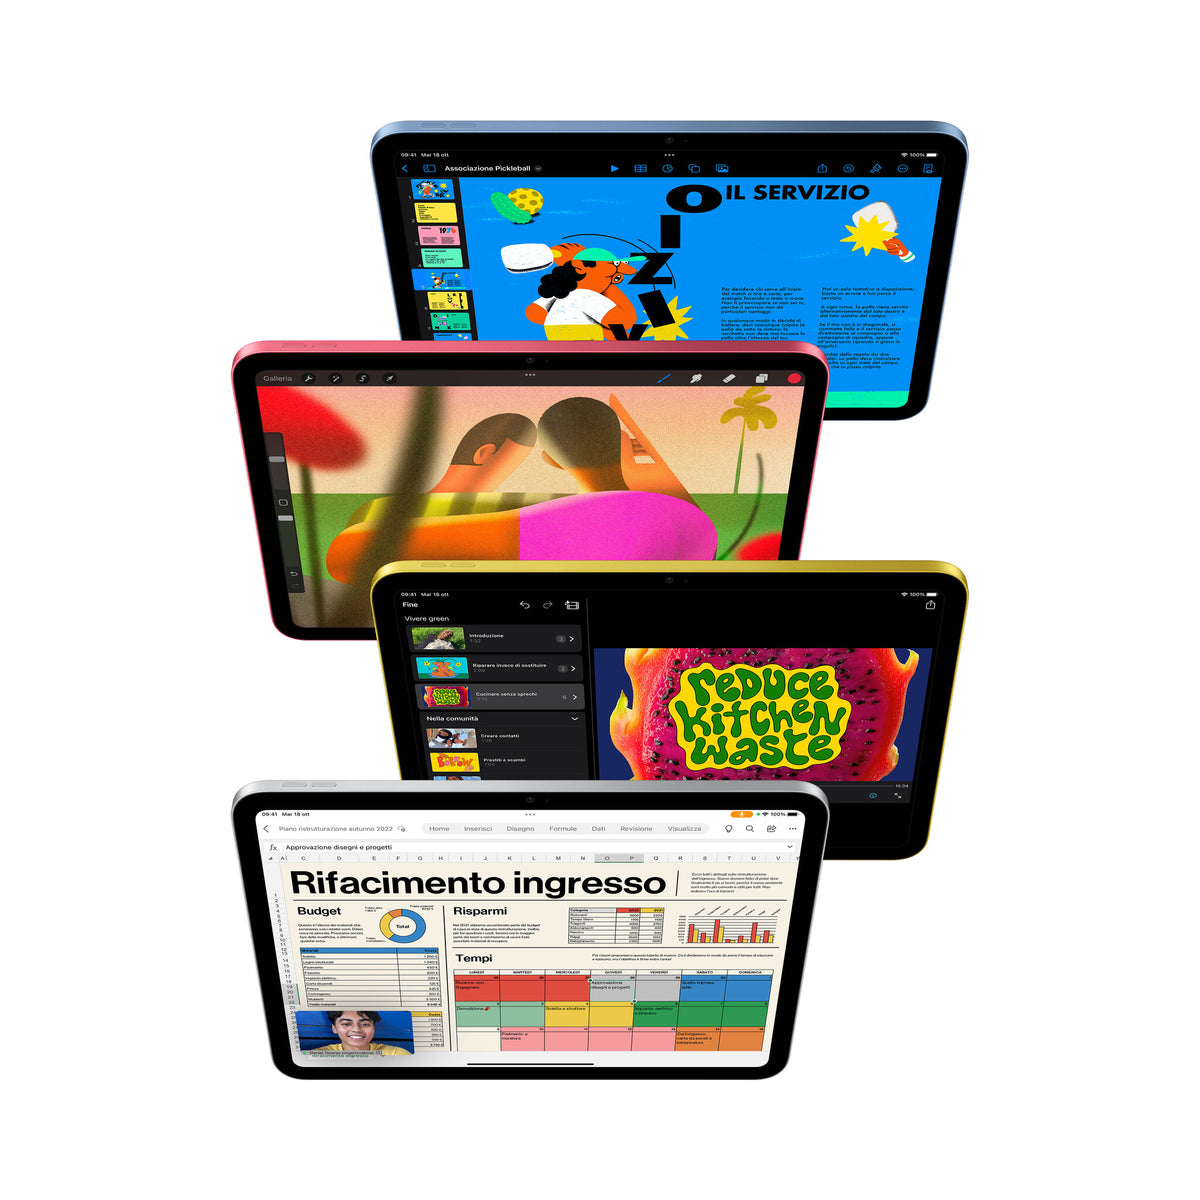 Apple iPad 5G - TD-LTE &amp; FDD-LTE - 256 GB - 27.7 cm (10.9&quot;) - Wi-Fi 6 - iPadOS 16 - Pink